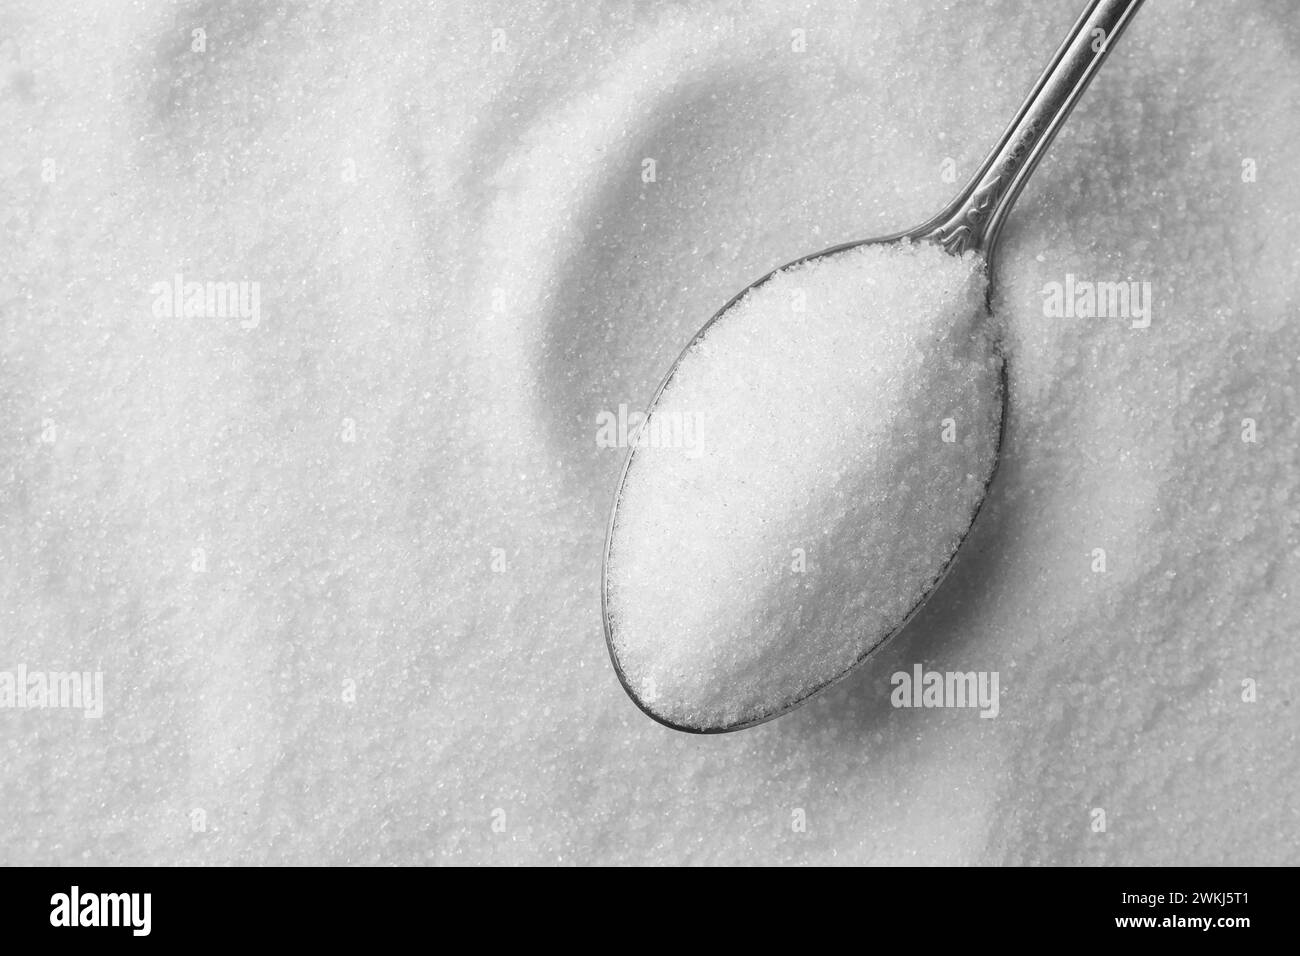 Metal spoon on granulated sugar, top view Stock Photo